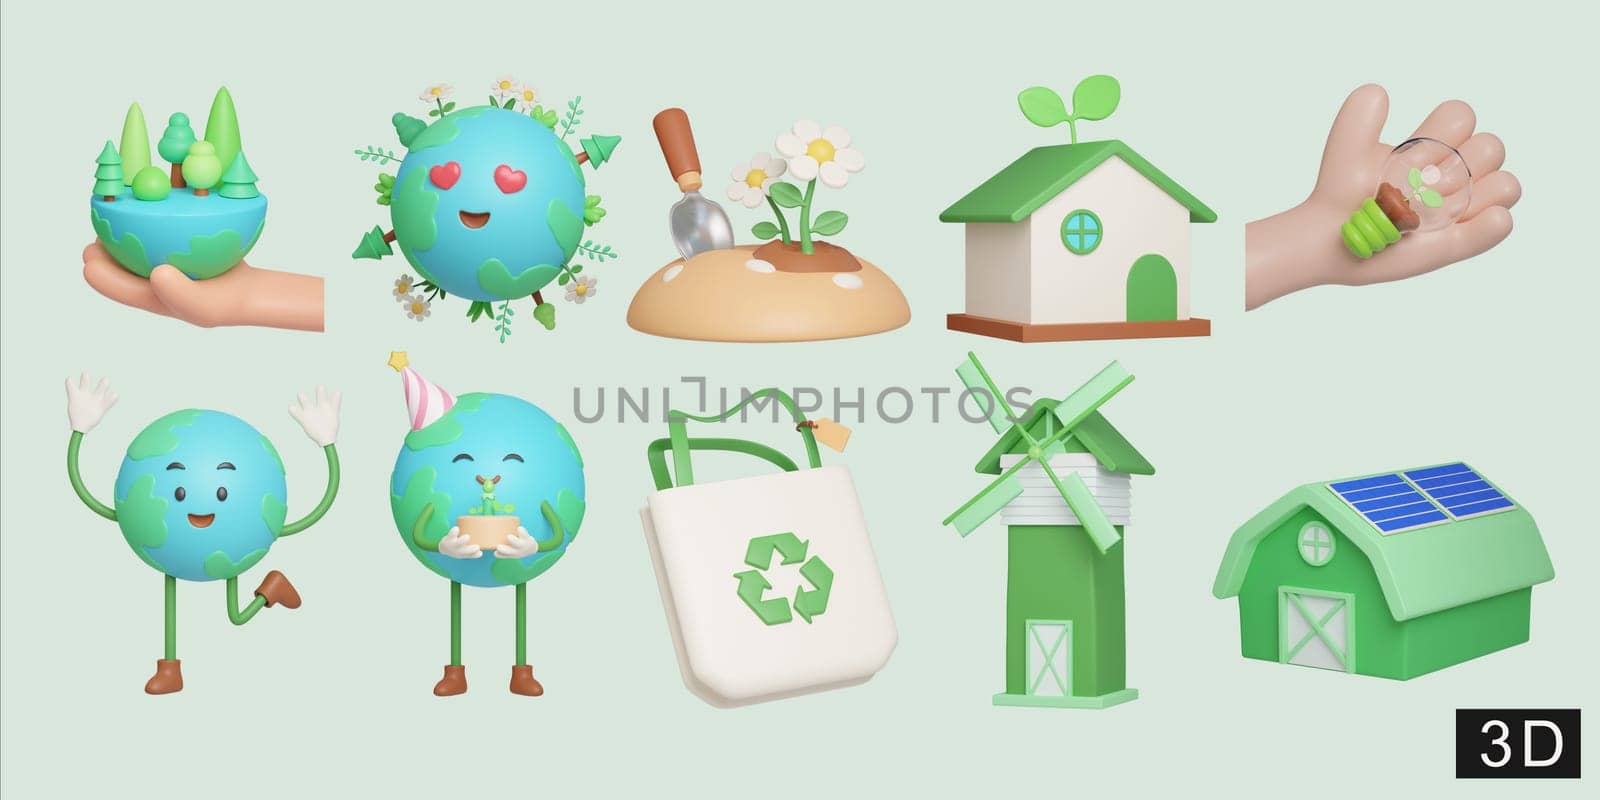 Eco Global Warming icon set Illustration Eco global warming icons. 3D Illustration by meepiangraphic